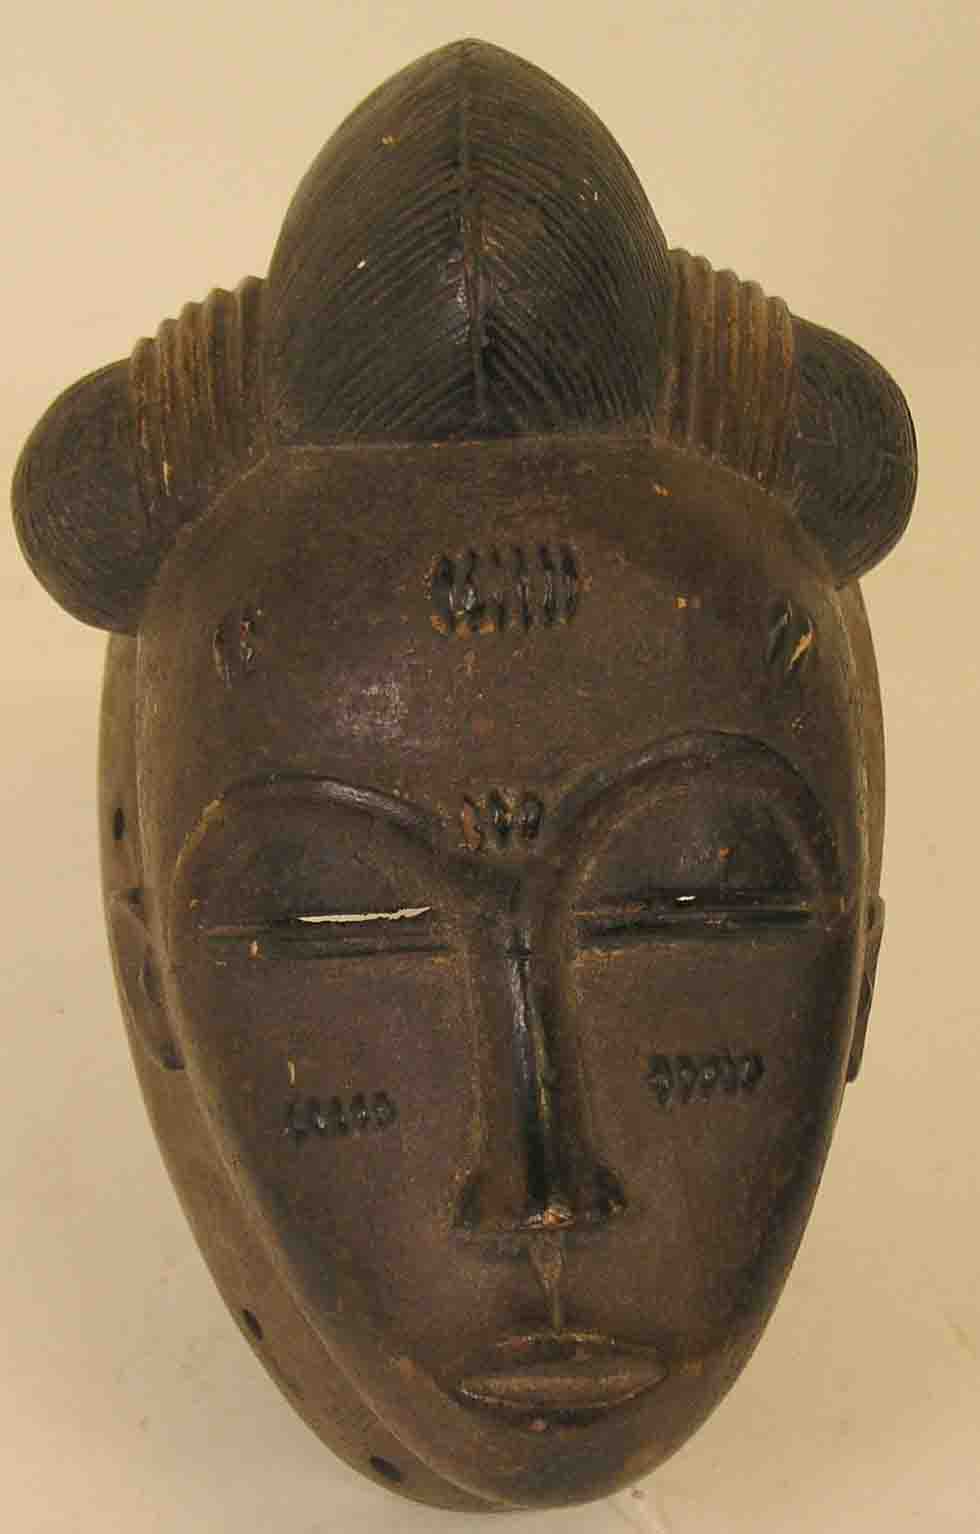 Afrika. Maske, Baule, Elfenbeinküste, Höhe: 33cm.  Mindestpreis: 20 EUR